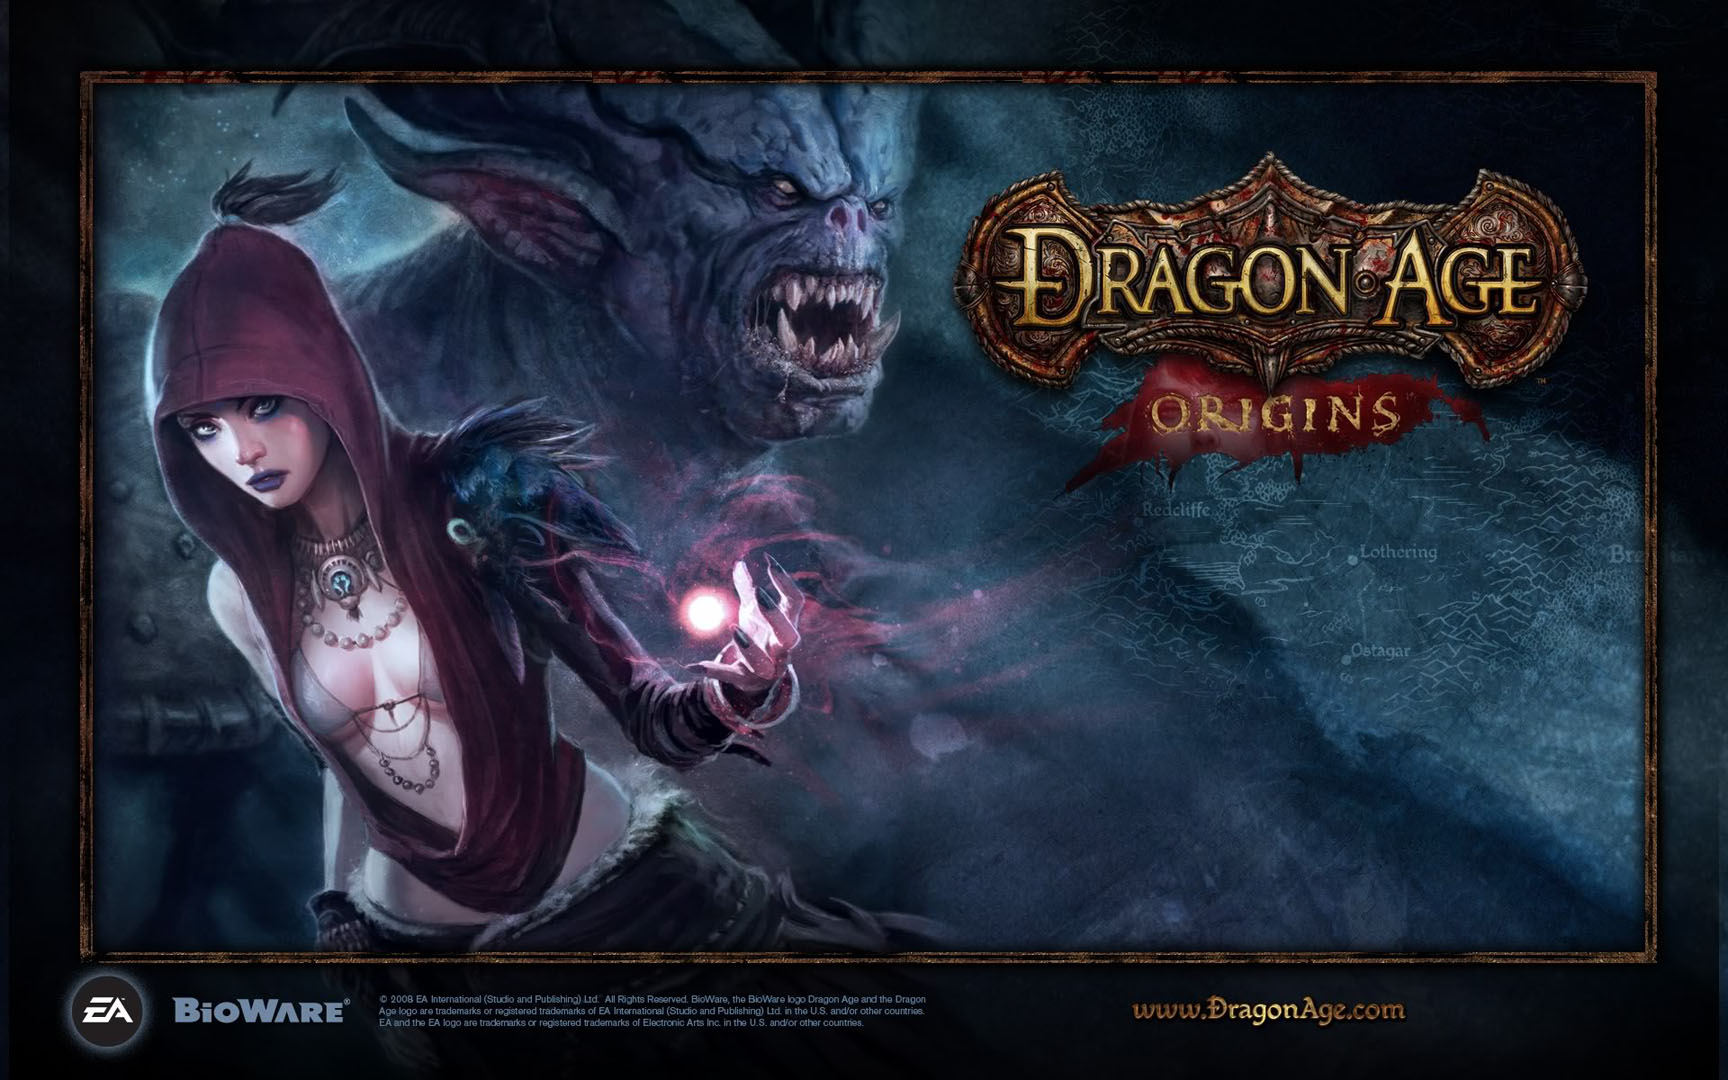 Morrigan Landscape   Rpg Games Wallpaper Image featuring Dragon Age